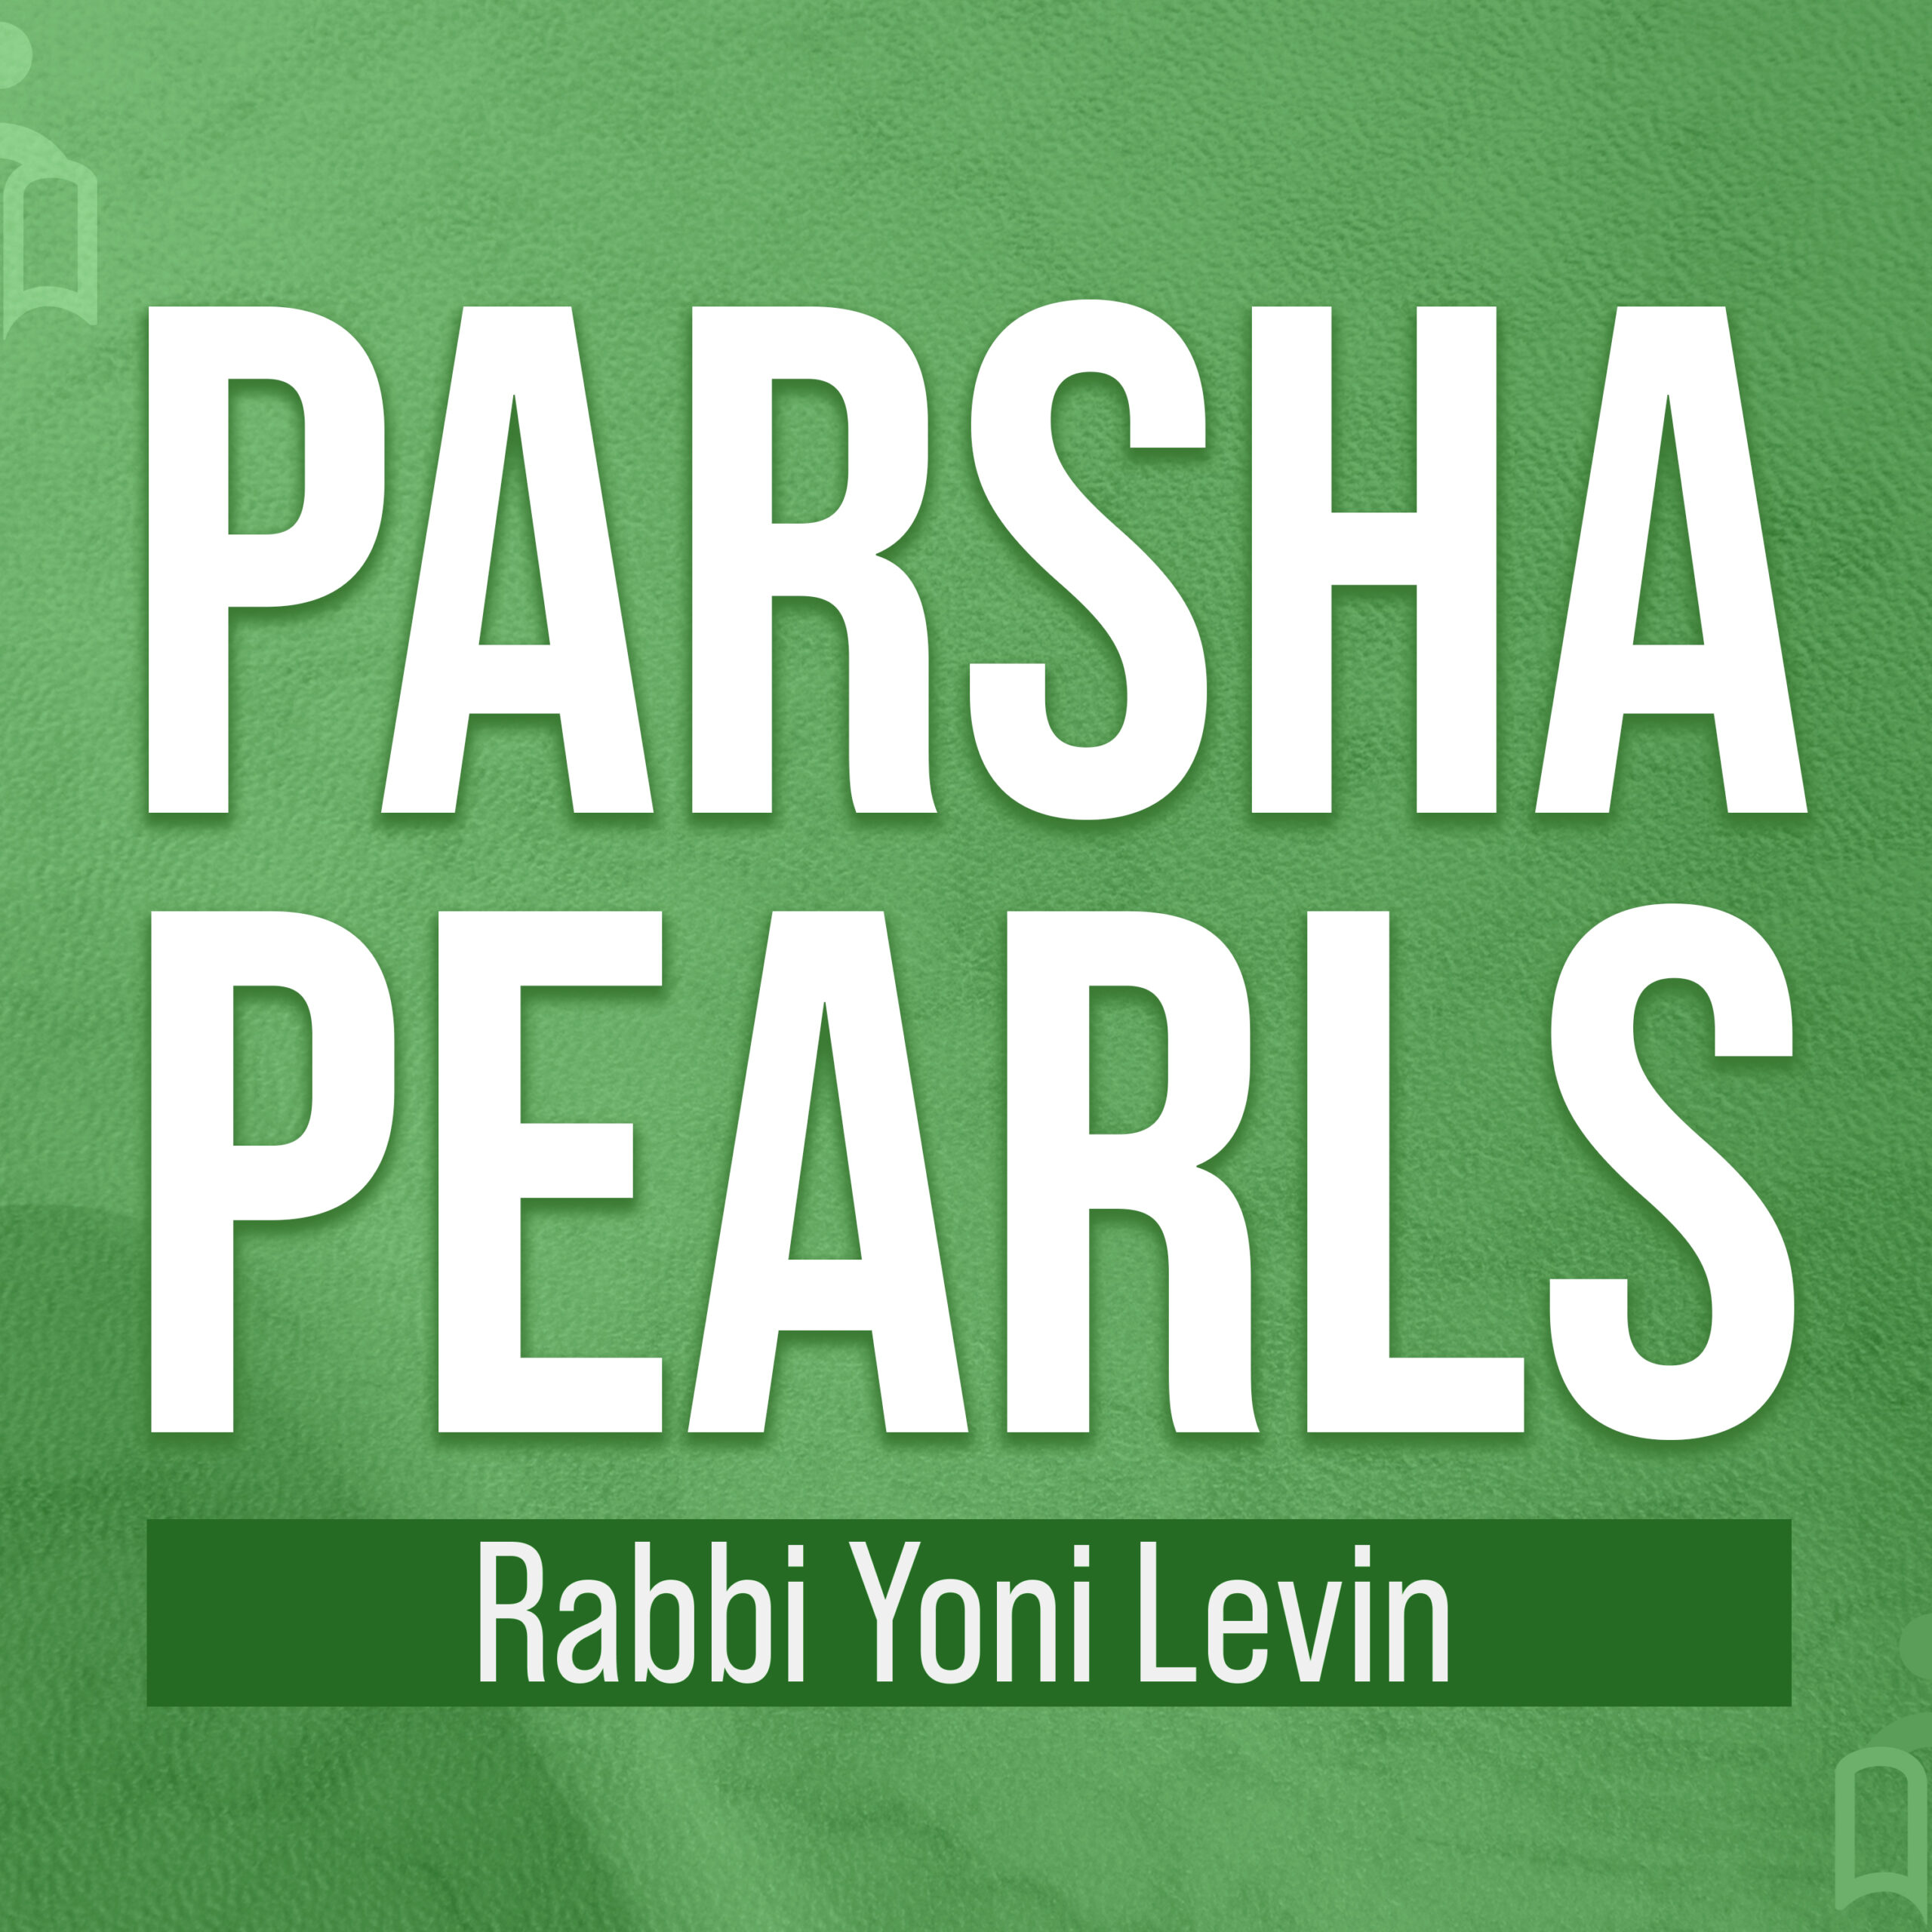 Rabbi Levin - Hafrashas Challah: Bridging the Heavens and Earth